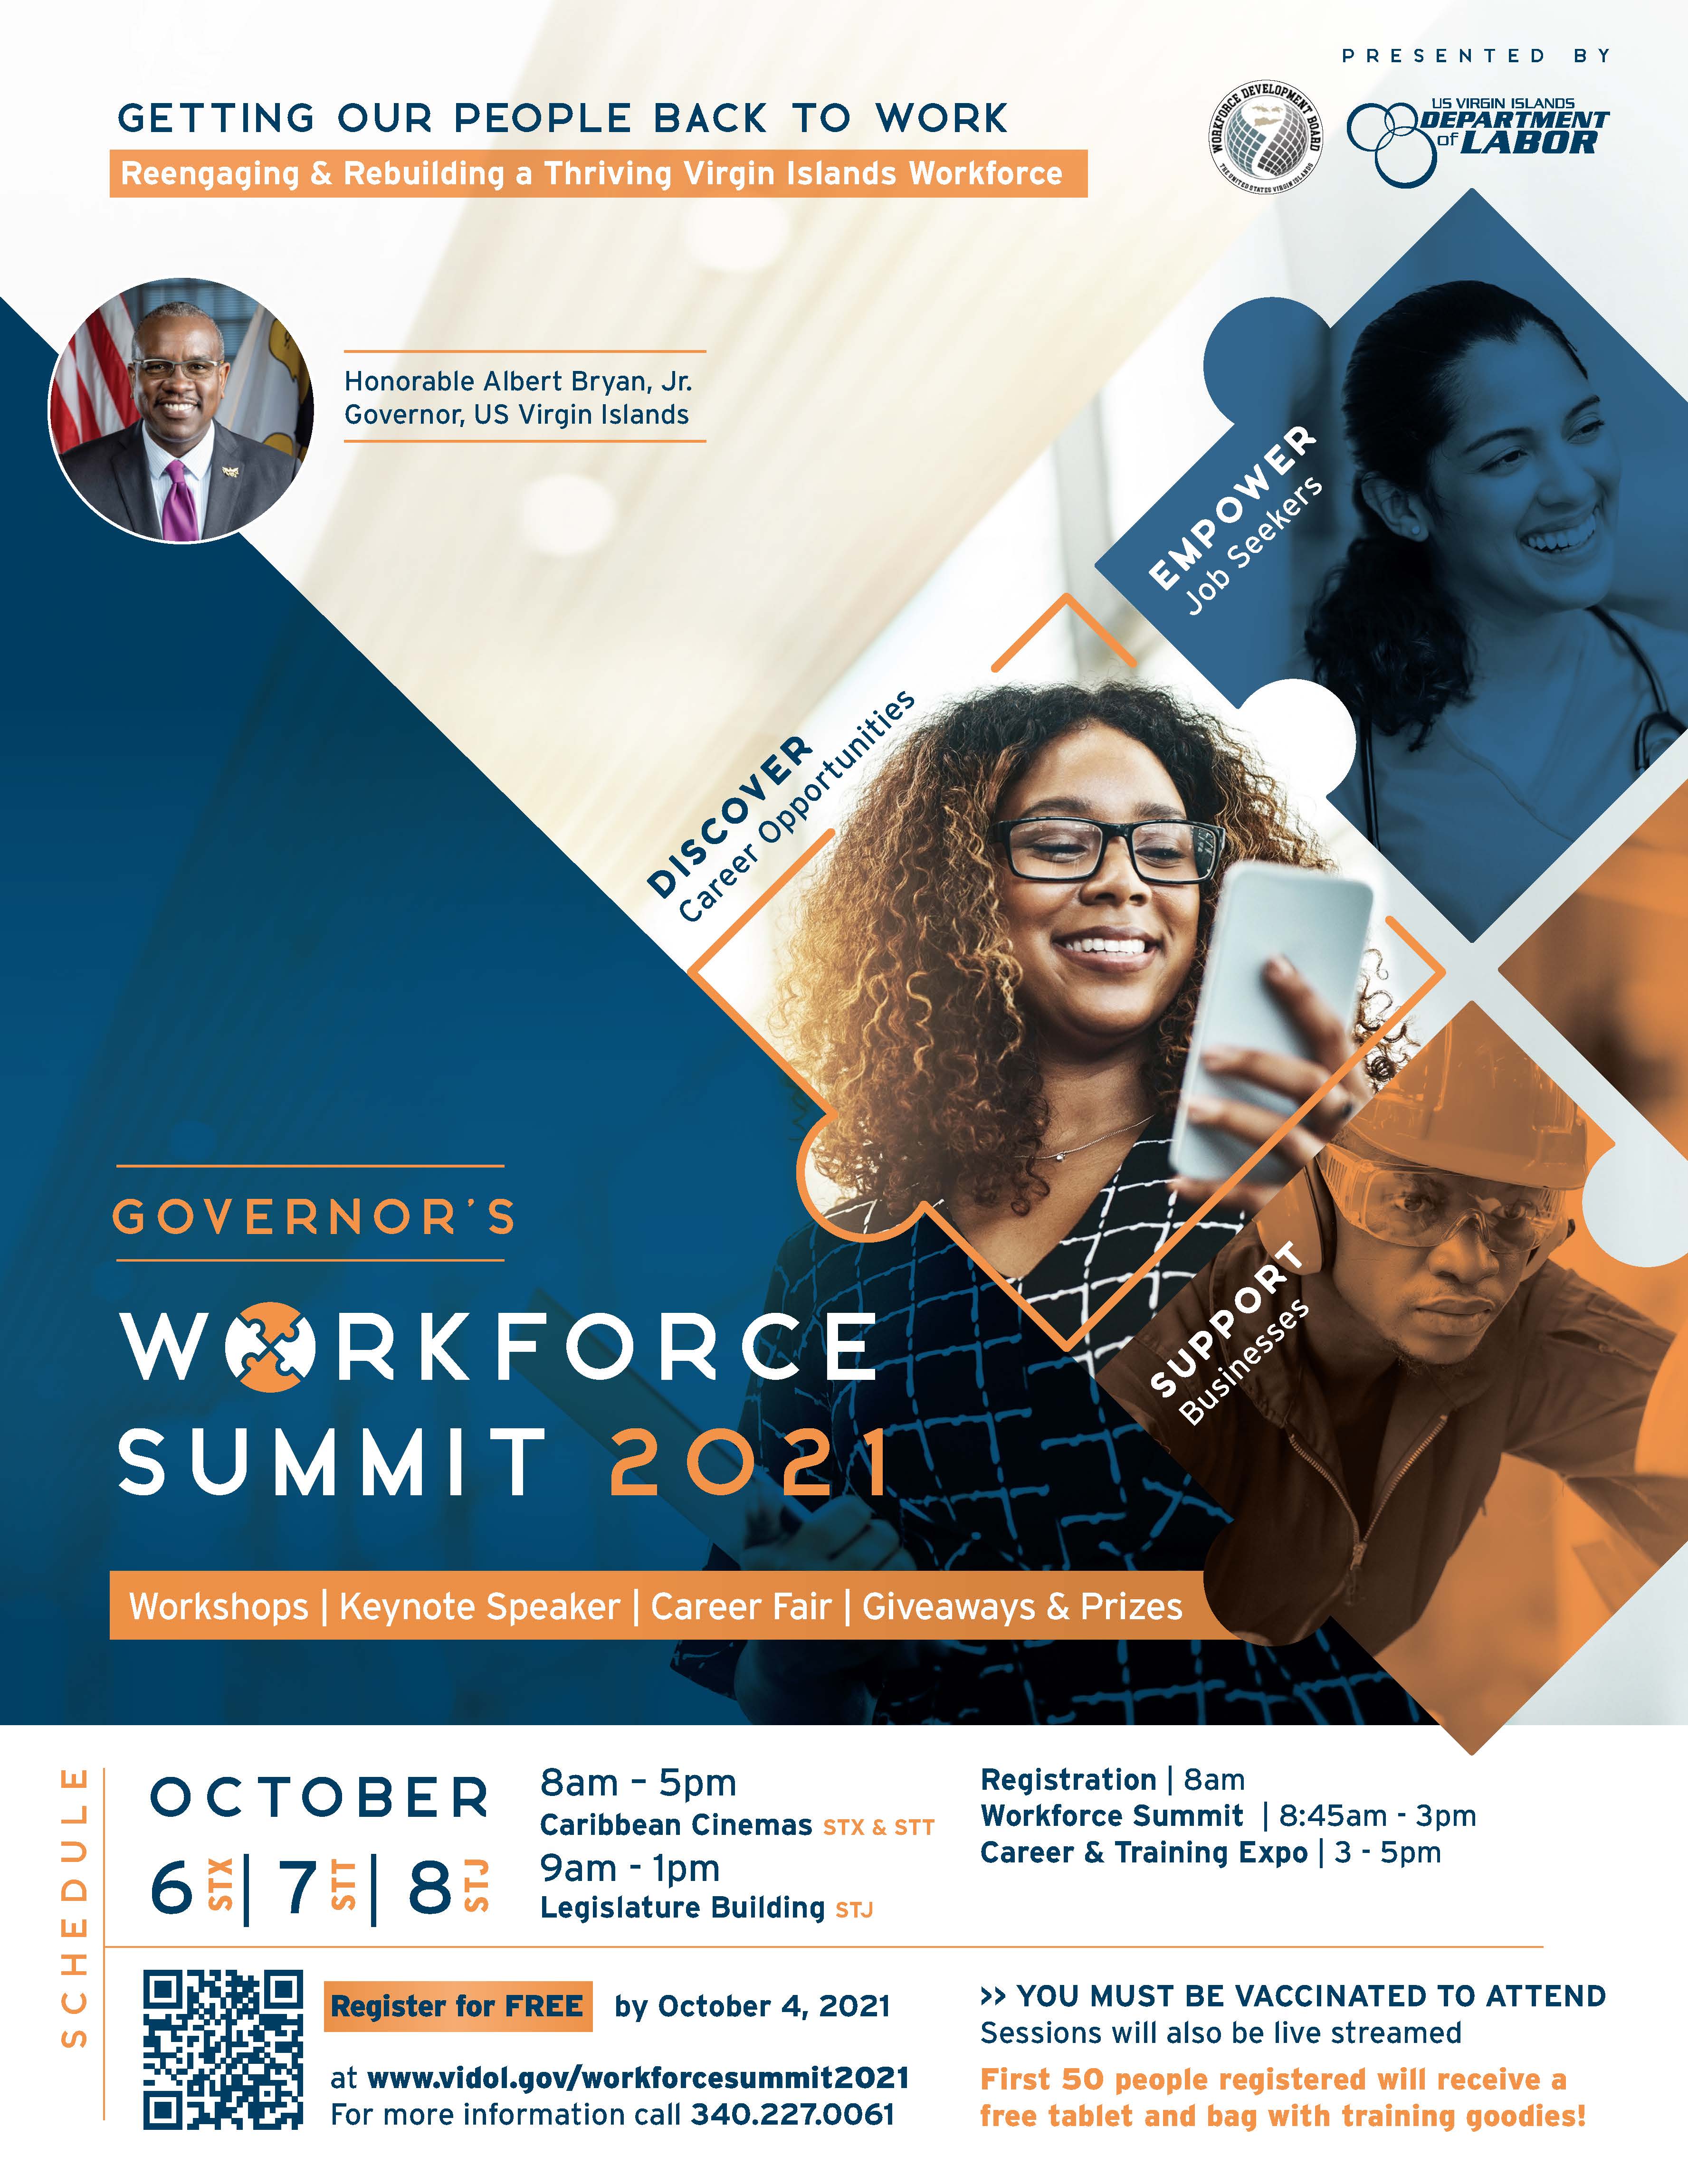 Workforce Summit 2021 Virgin Islands Department of Labor